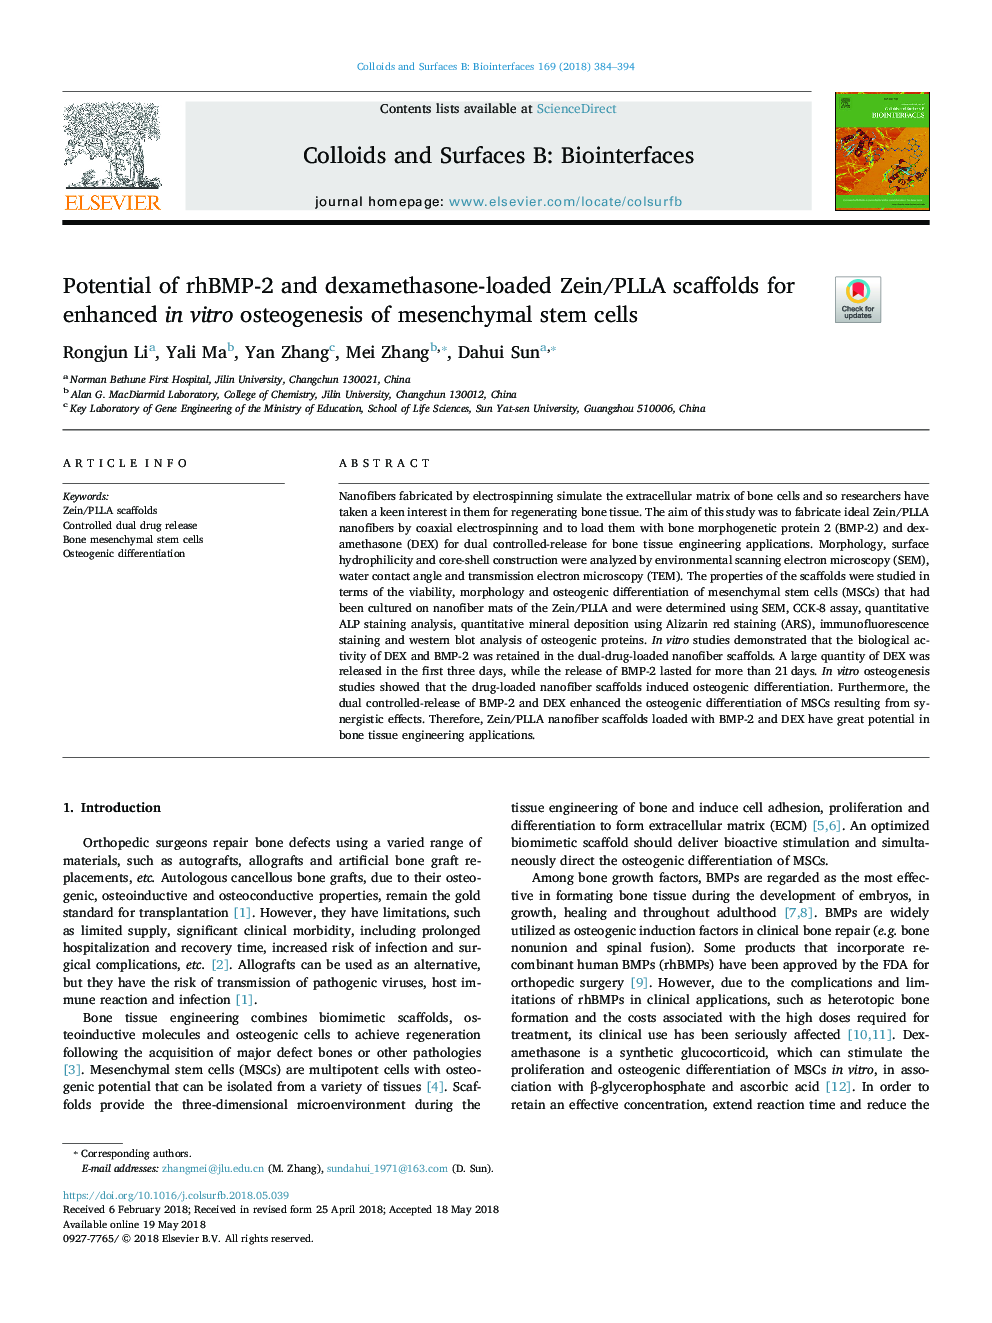 Potential of rhBMP-2 and dexamethasone-loaded Zein/PLLA scaffolds for enhanced in vitro osteogenesis of mesenchymal stem cells